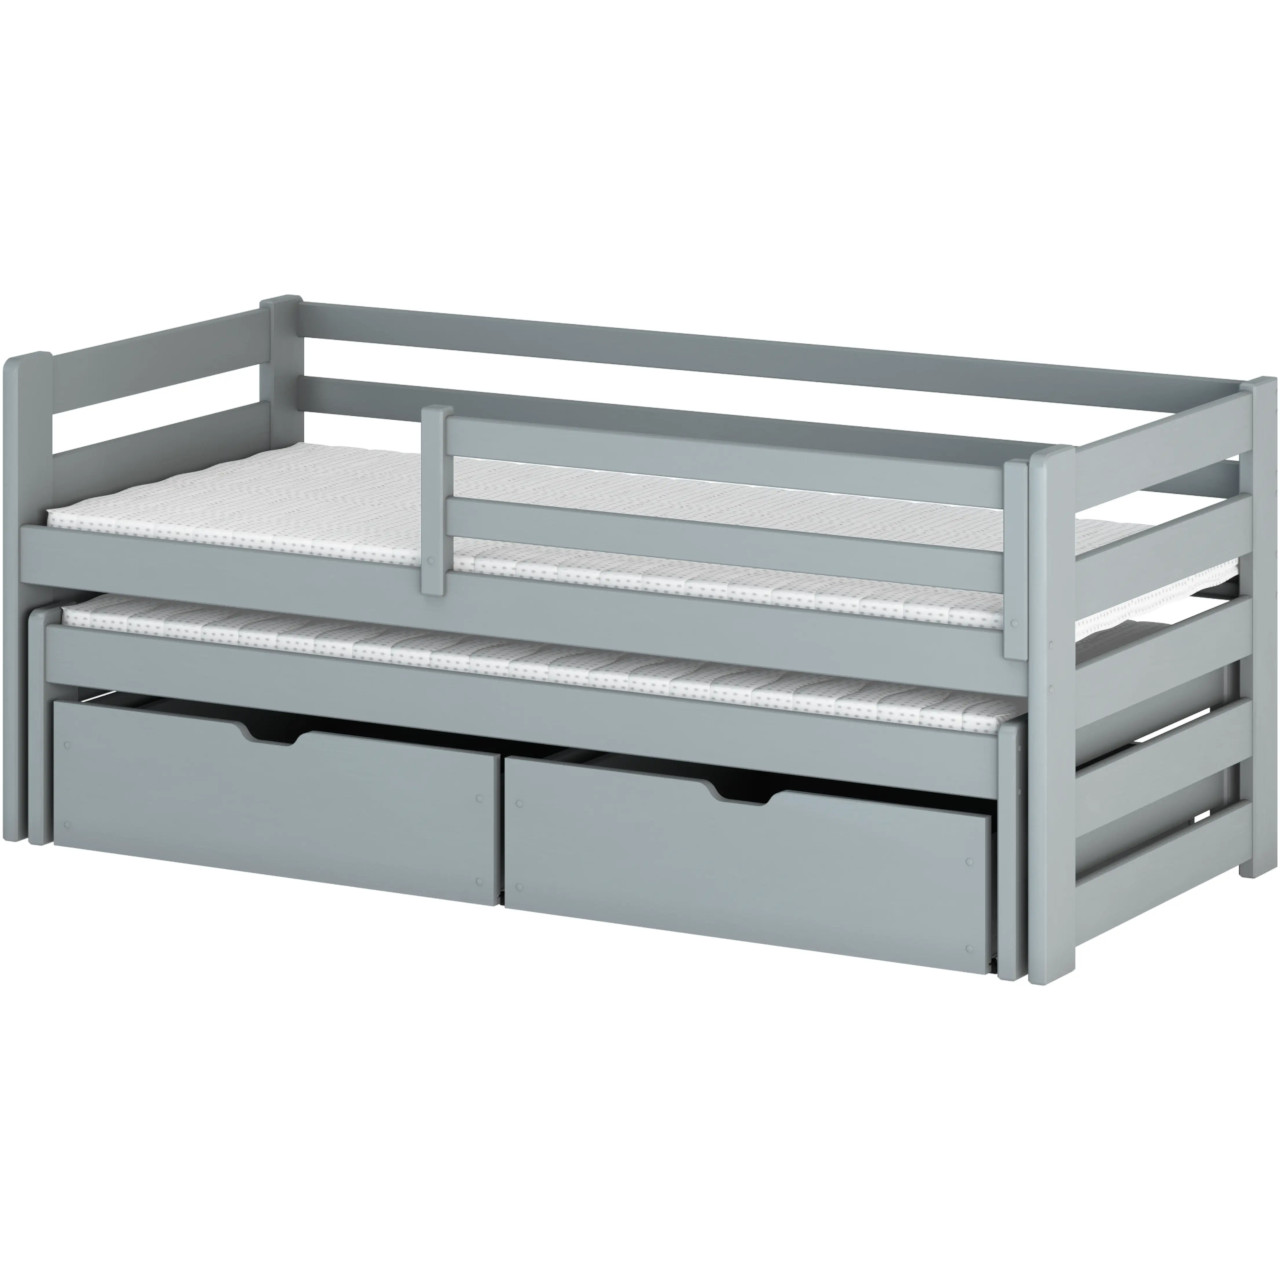 Bunk bed 80x180 LISA ash grey